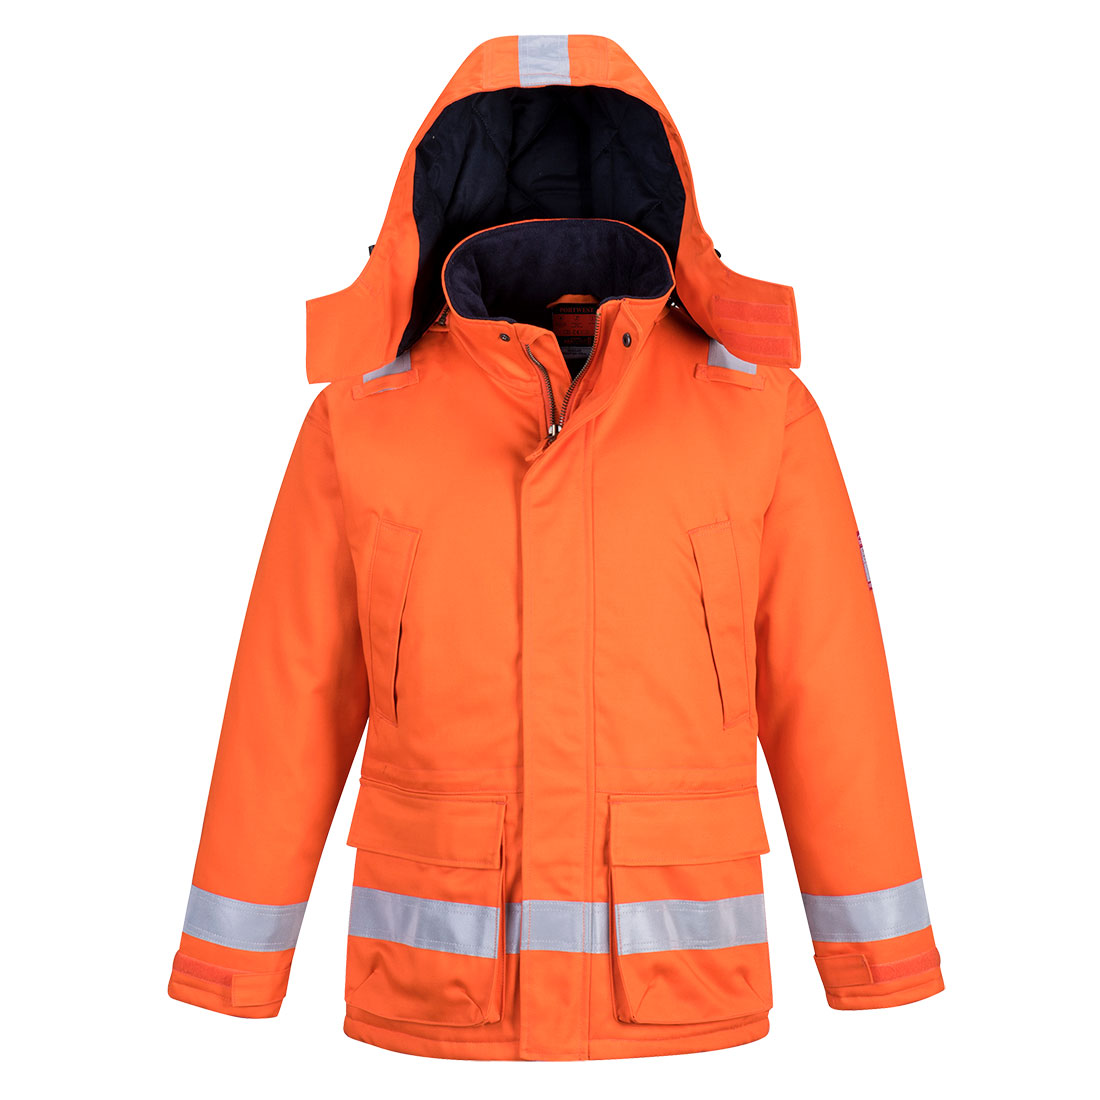 Araflame Insulated Winter Jacket  Size L Orange